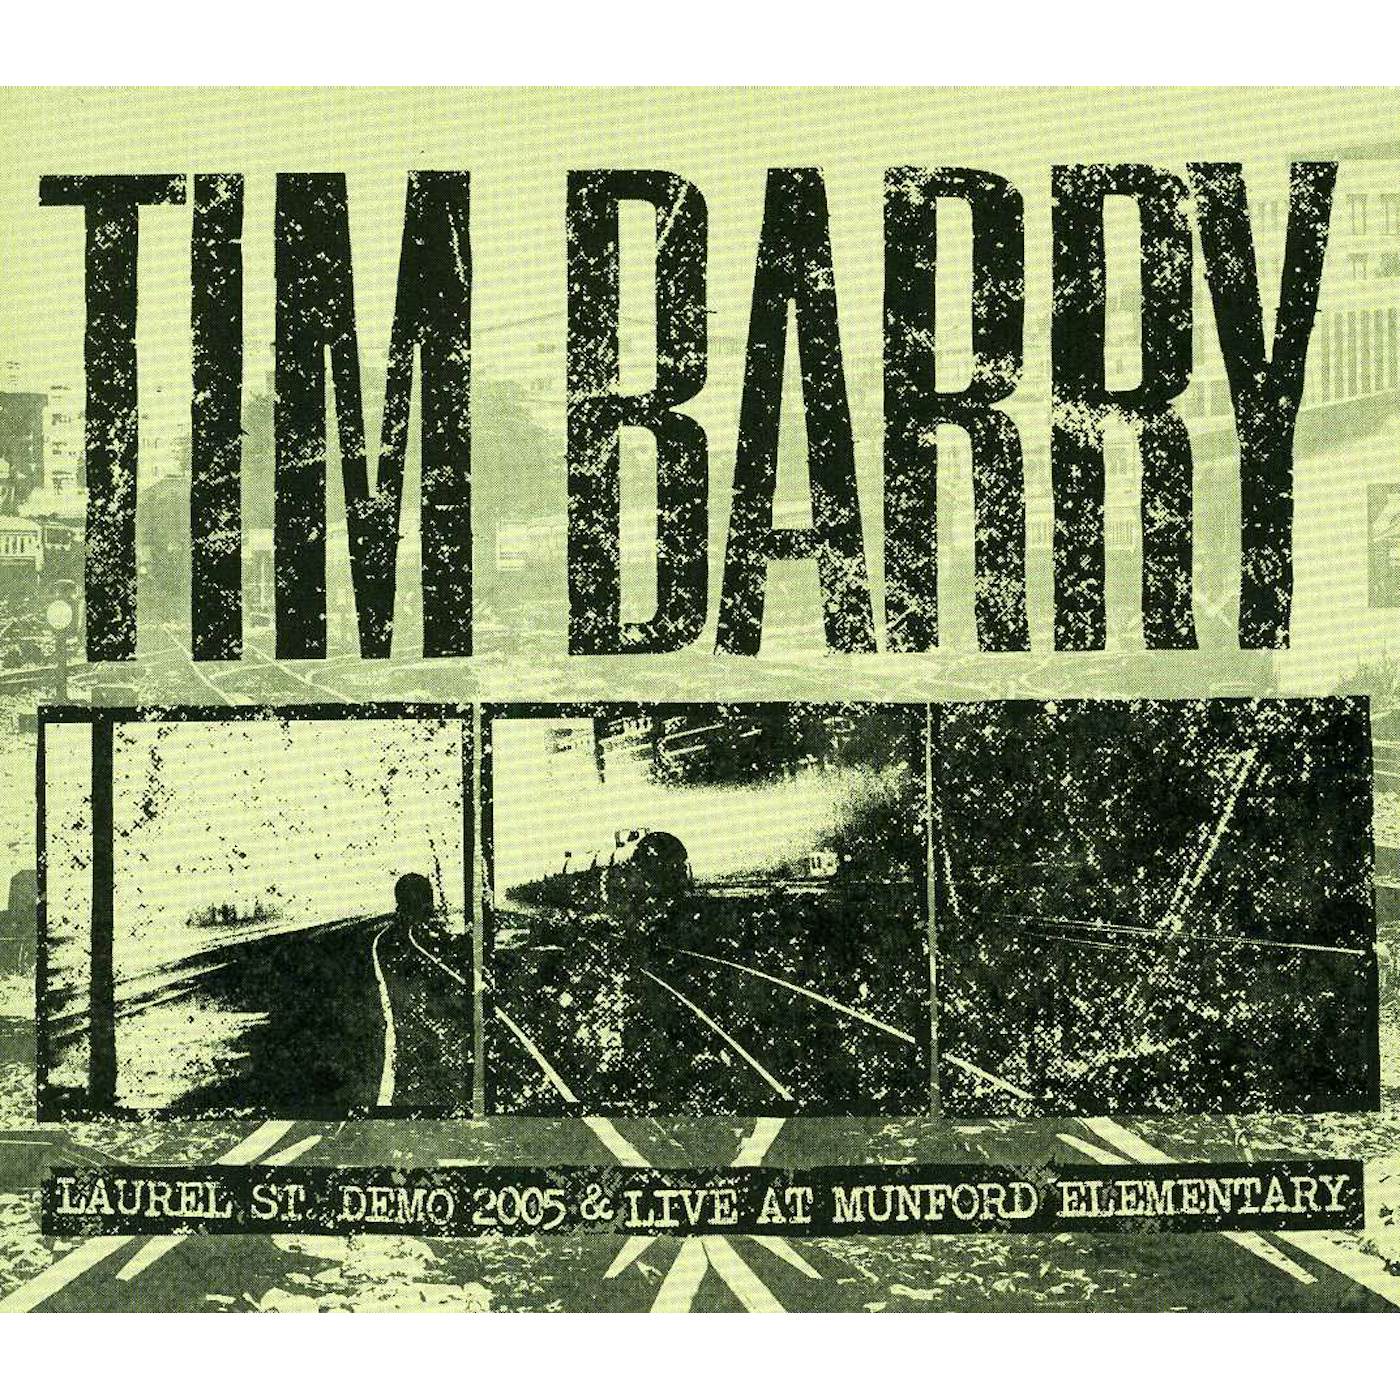 Tim Barry LAUREL ST. DEMO 2005 & LIVE AT MUNFORD ELEMENTARY CD